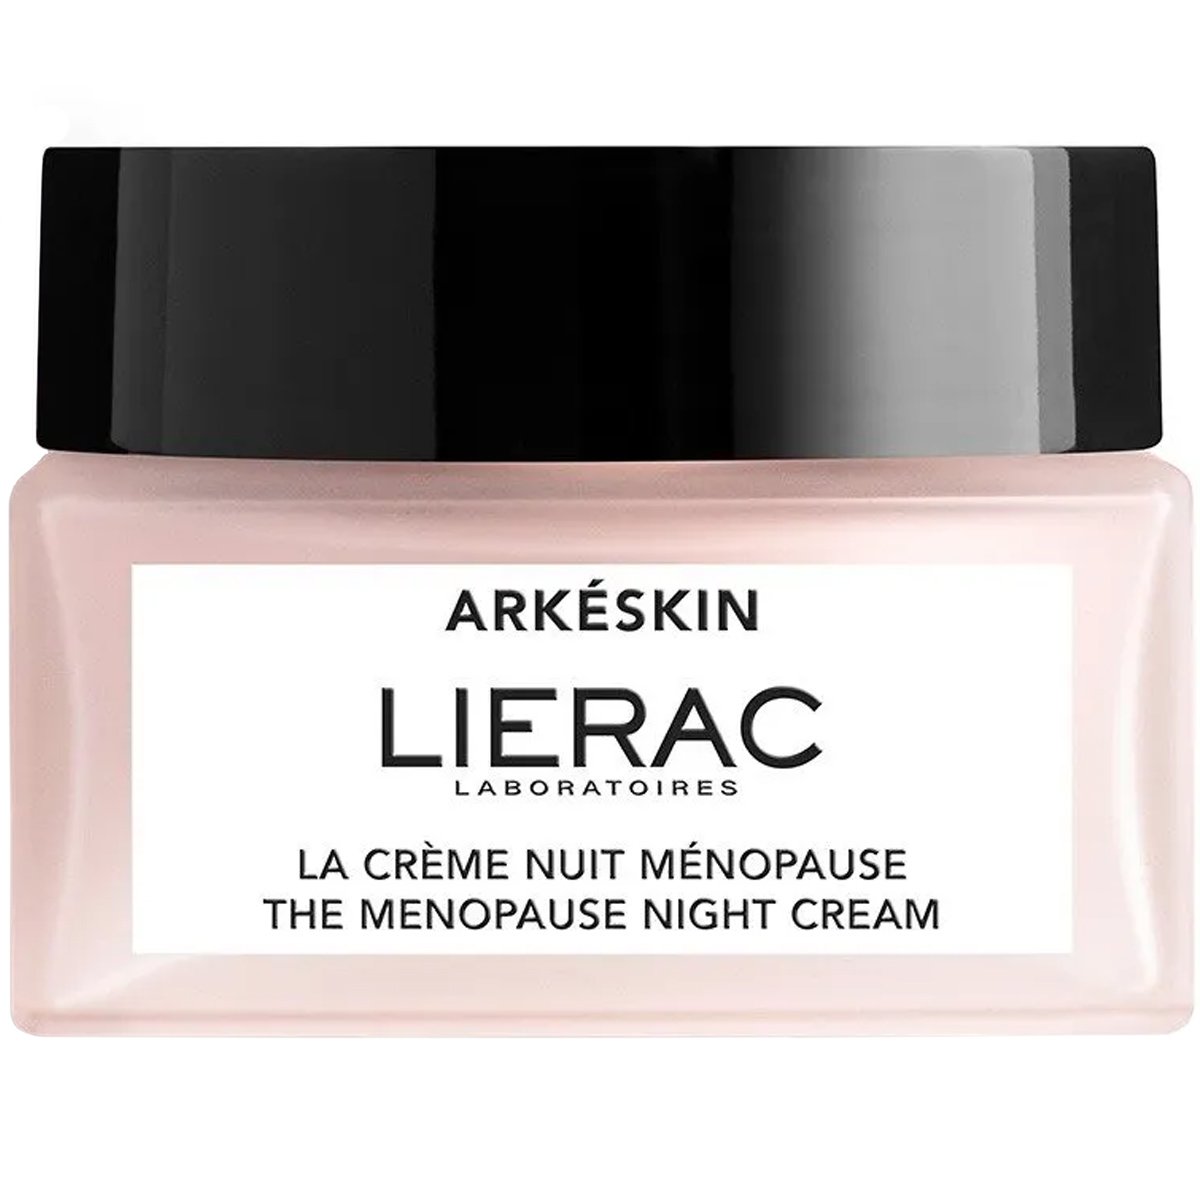 Lierac Arkeskin the Menopause Night Cream Κρέμα Νύχτας για Γυναίκες στην Εμμηνόπαυση 50ml